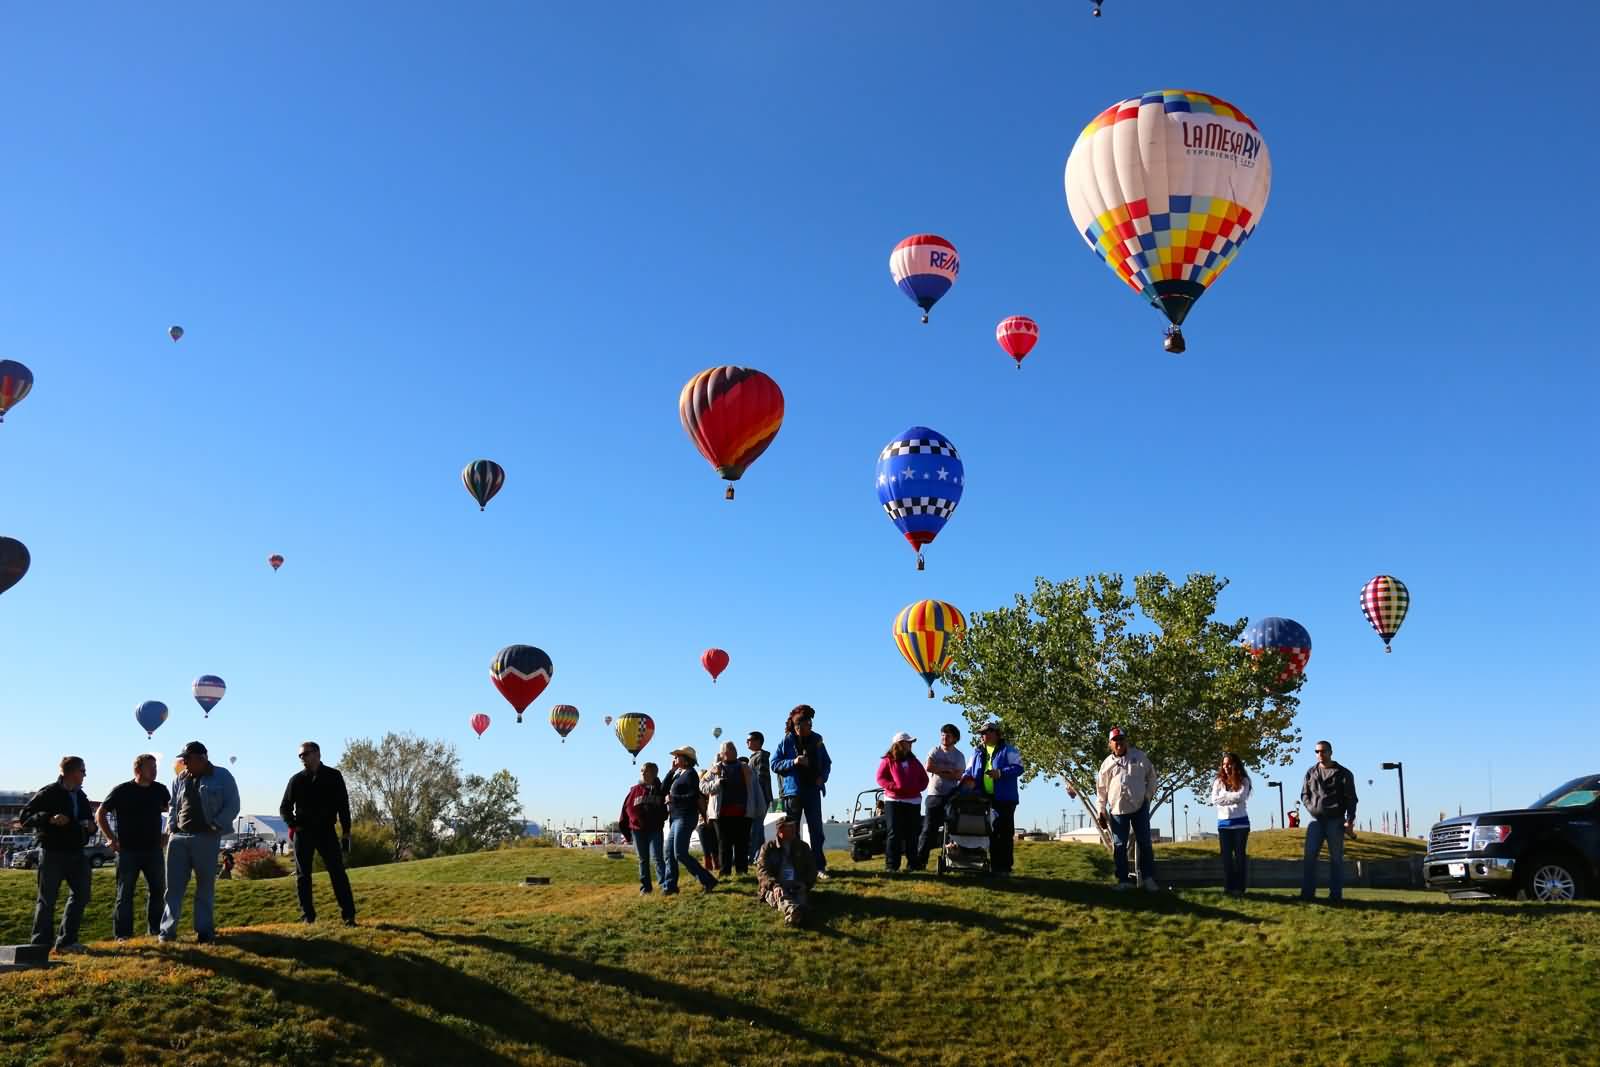 Flying Hot Balloons In The Air During Albuquerque Balloon Festival